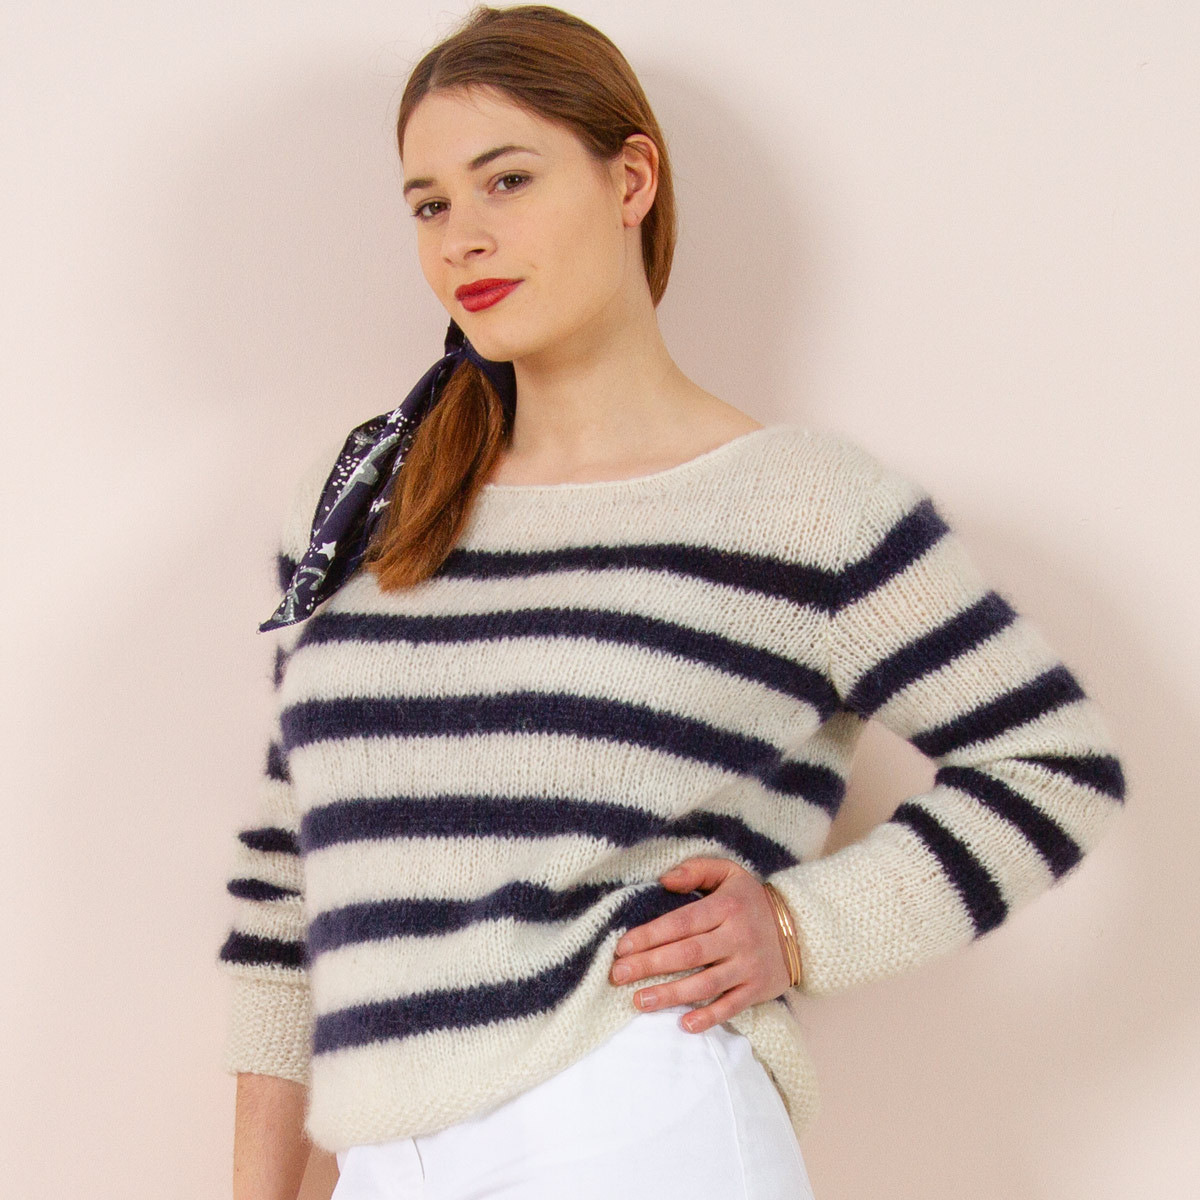 Courbine sweater knitting pattern